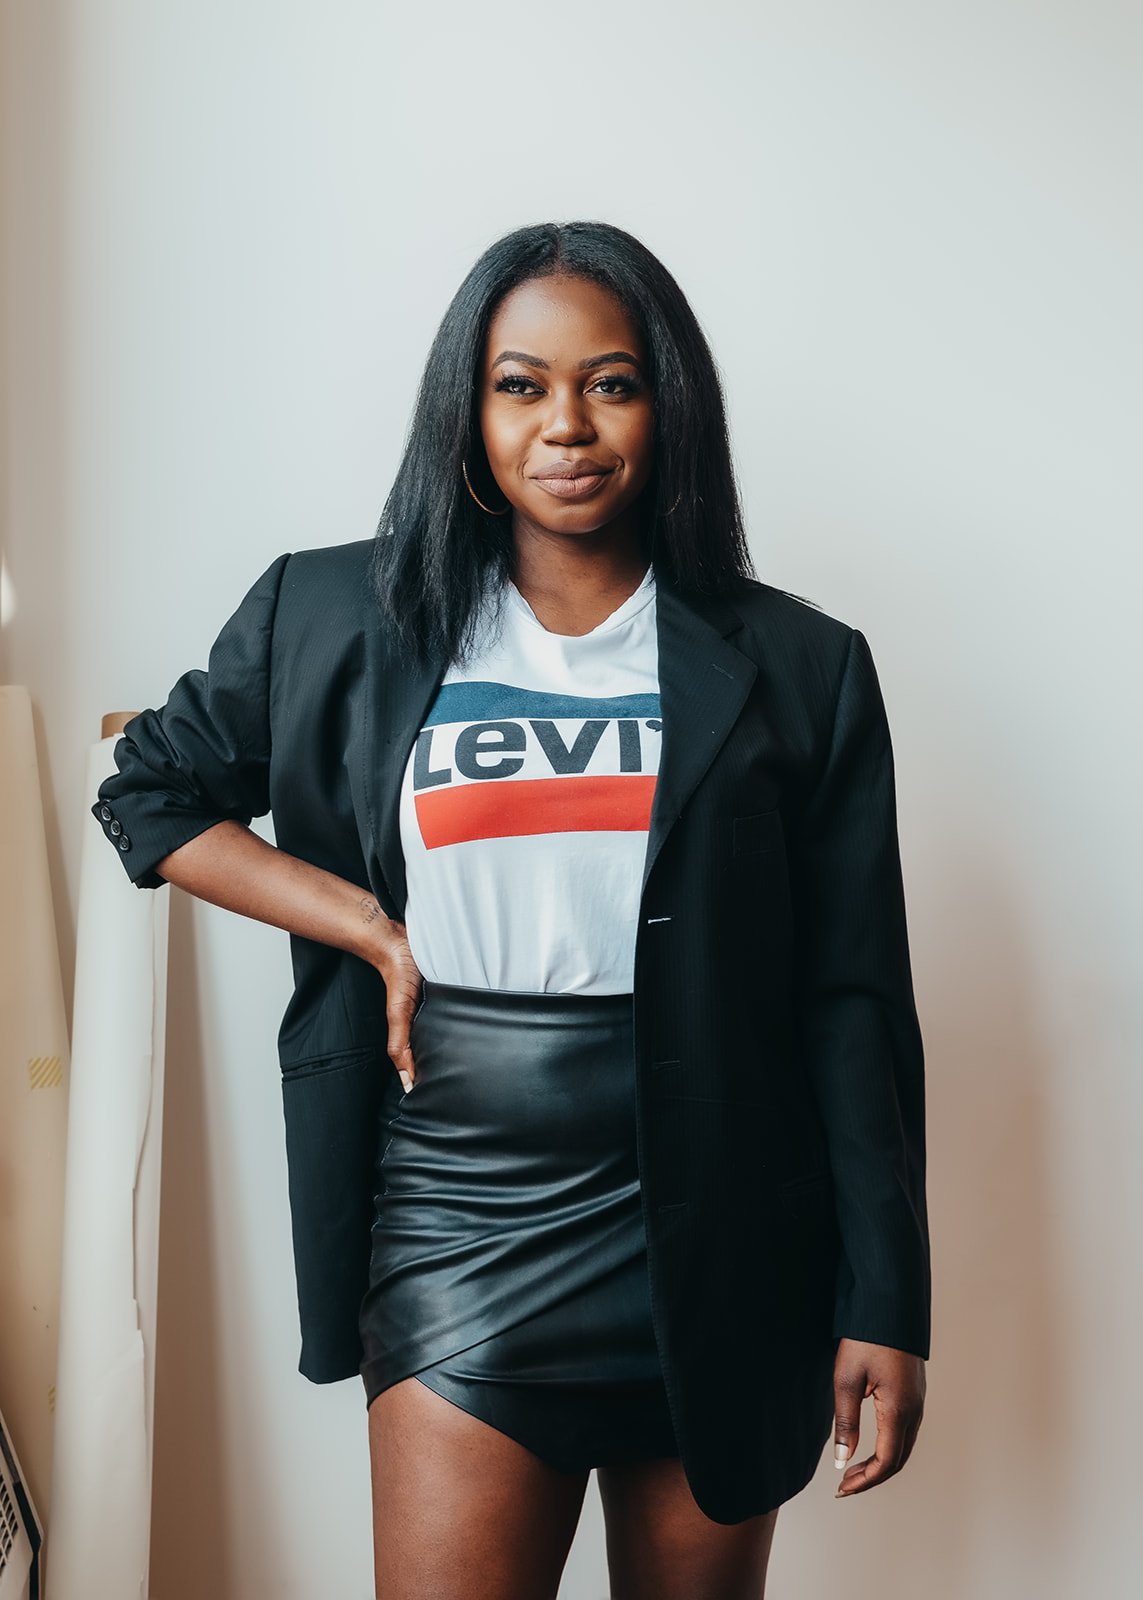 Black Female Entrepreneur Headshot Photos